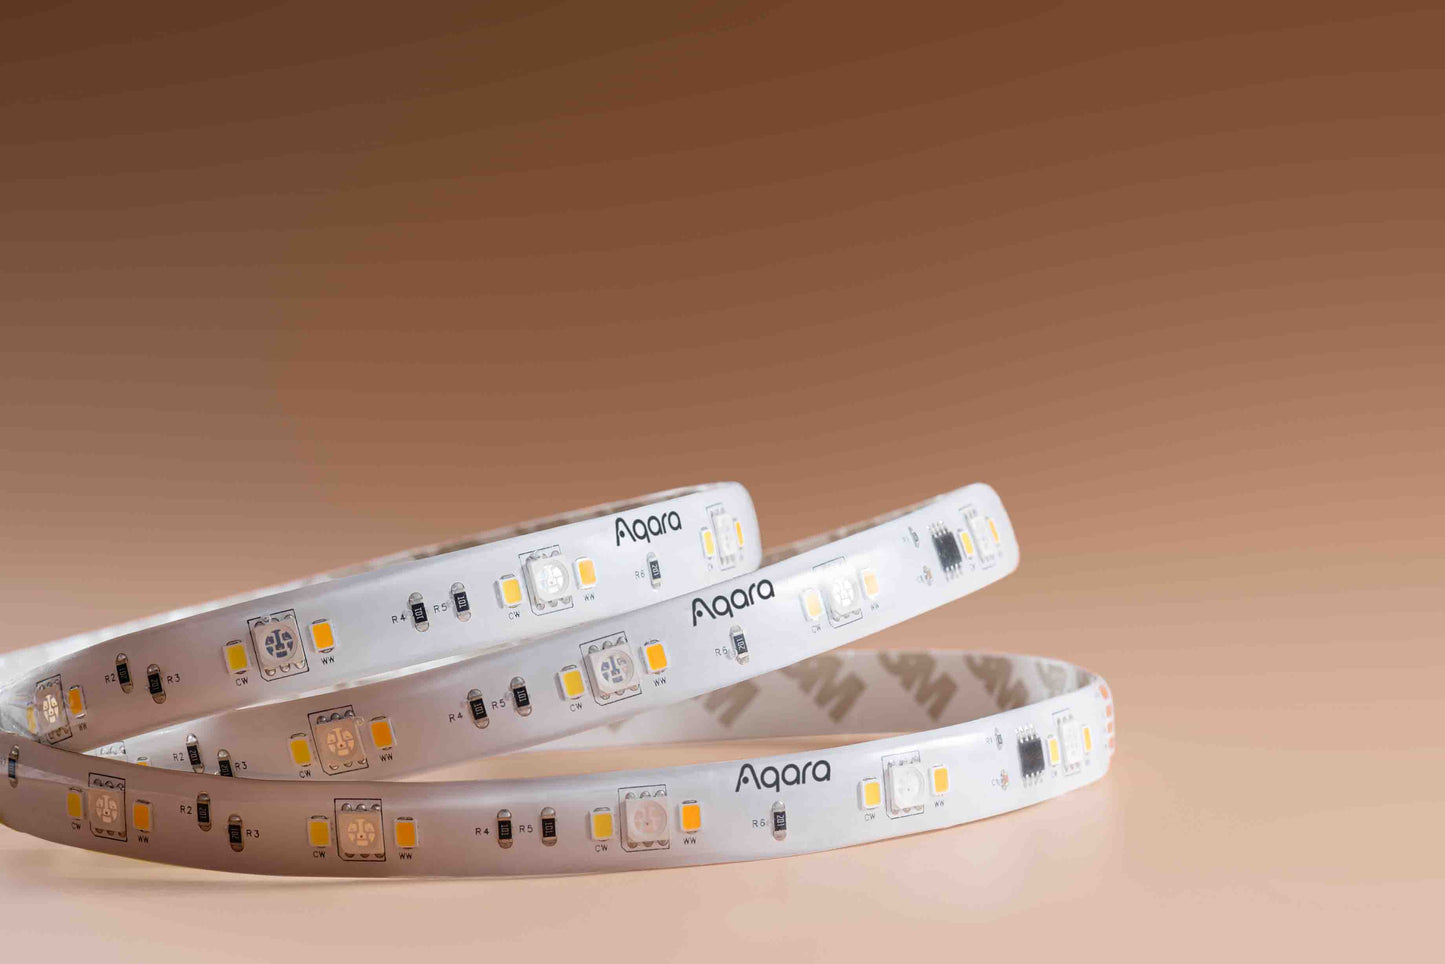 Aqara Smart LED Strip T1 Price Singapore